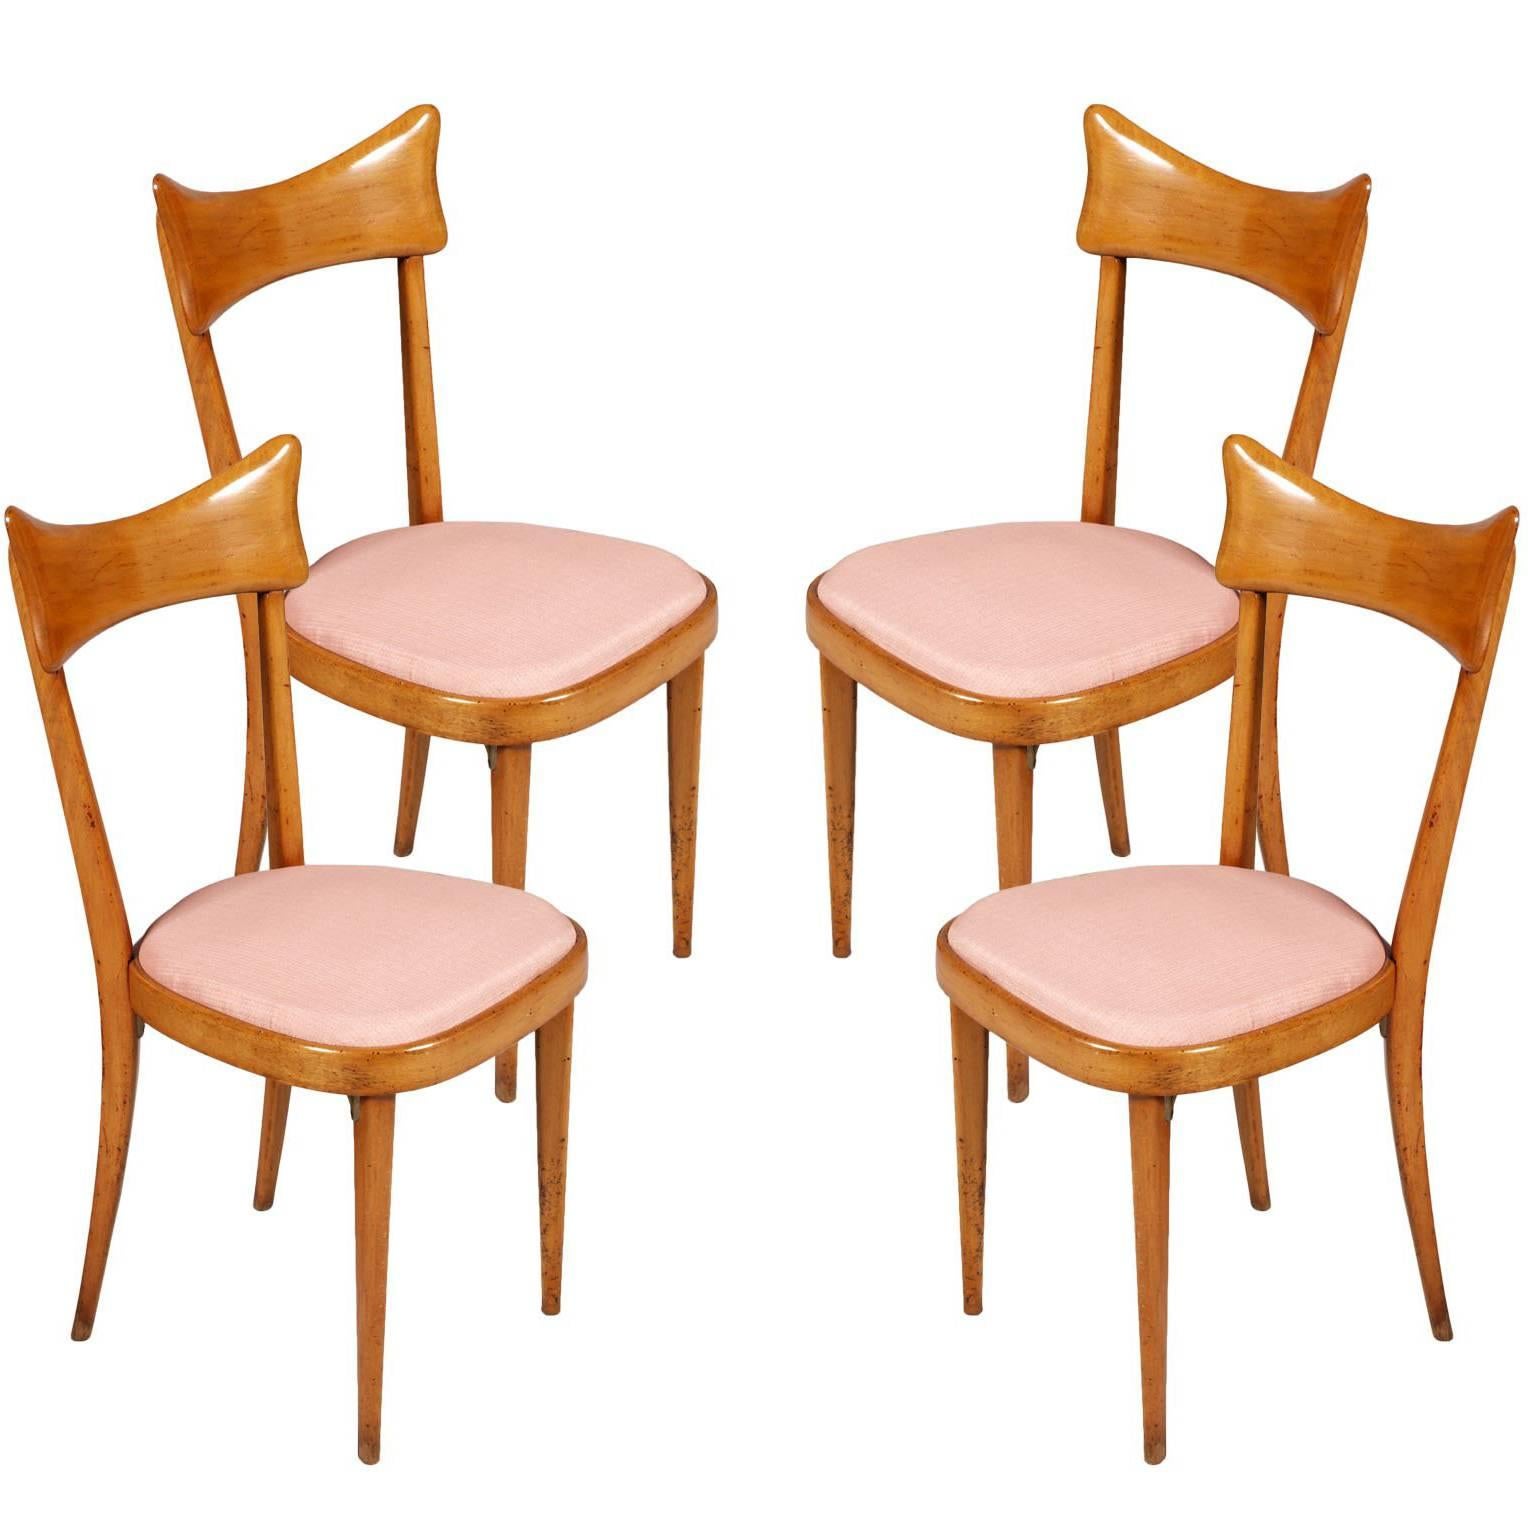 Mid-Century Modern Set of Four Chairs, Ico Parisi Manner in Blond Walnut